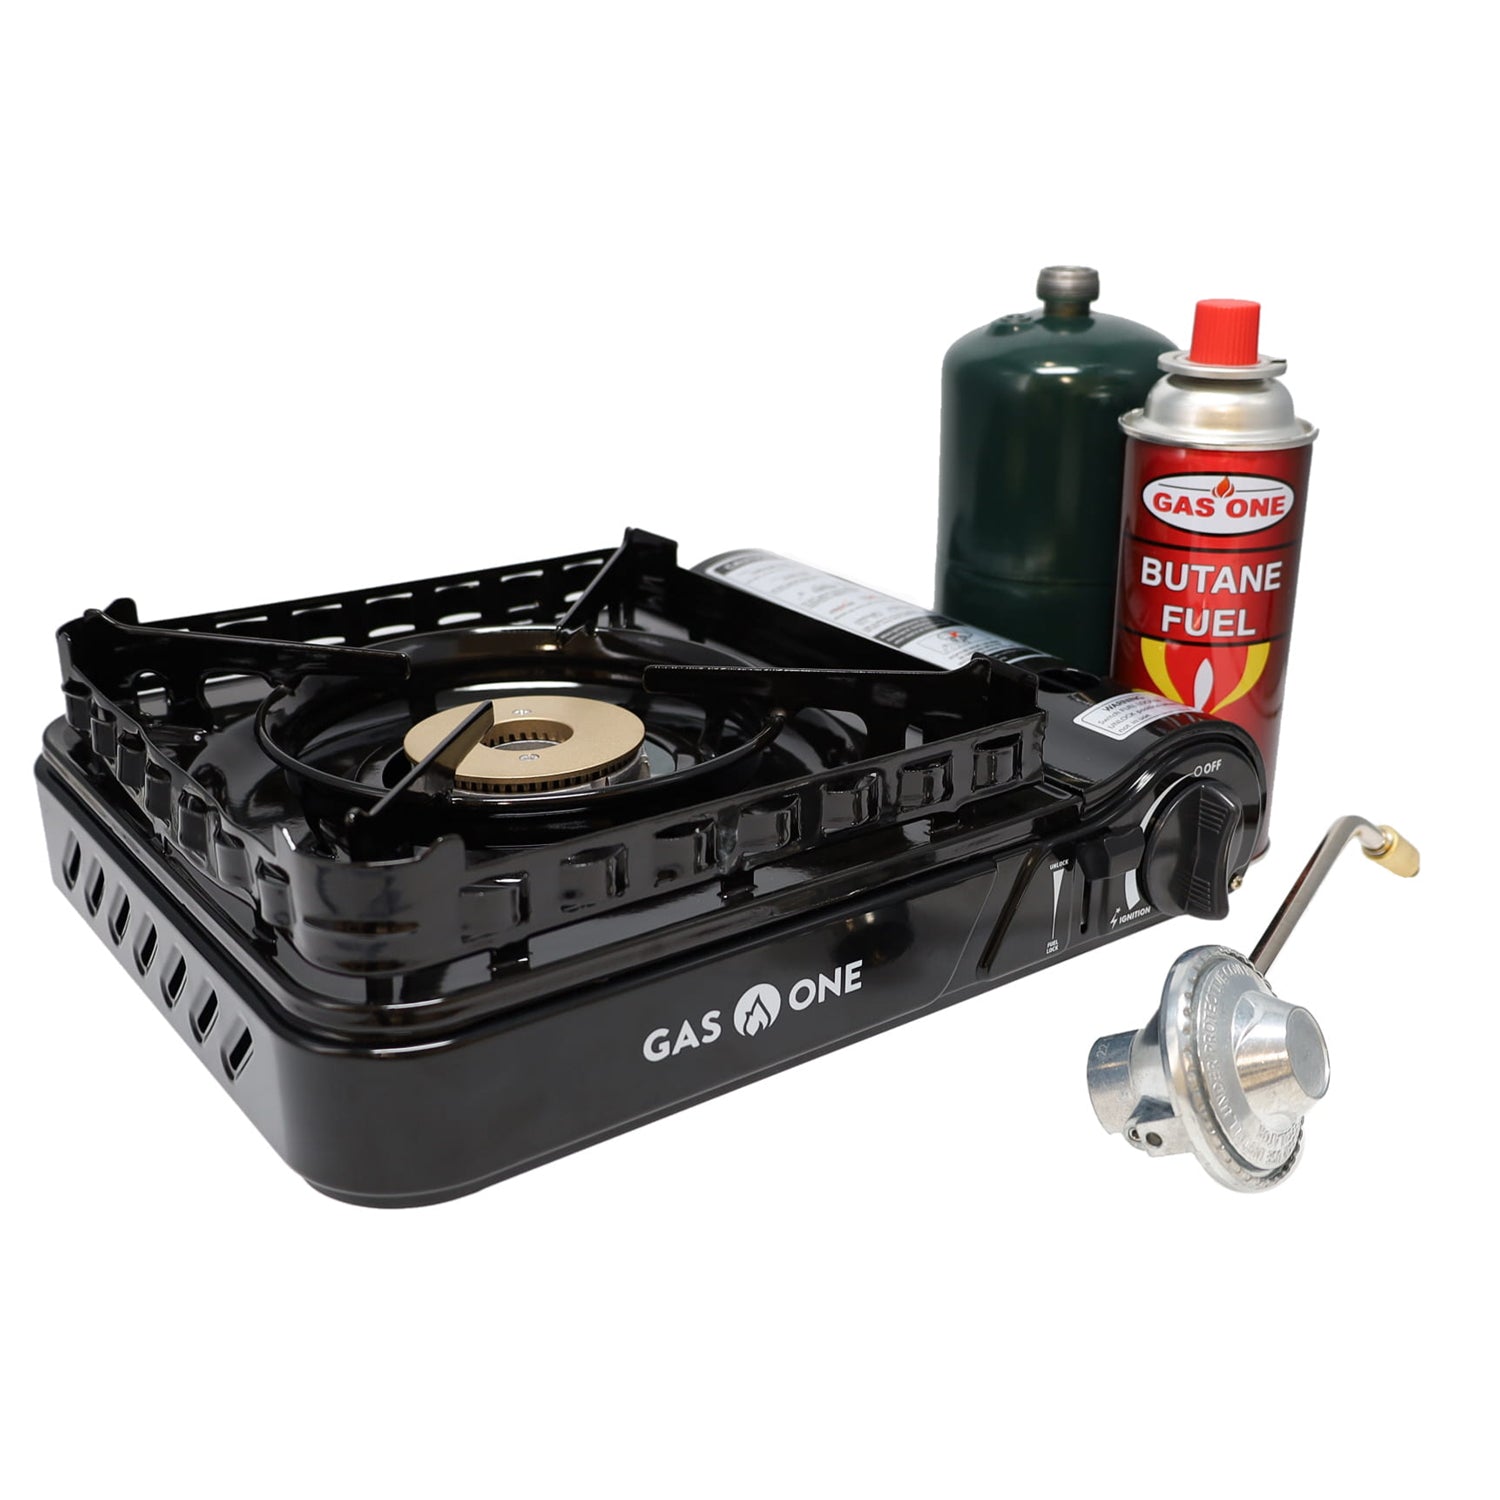 Choice Portable 5-Piece Cooking Kit with Butane Double Burner Range & 2  Pans - 16,000 BTU